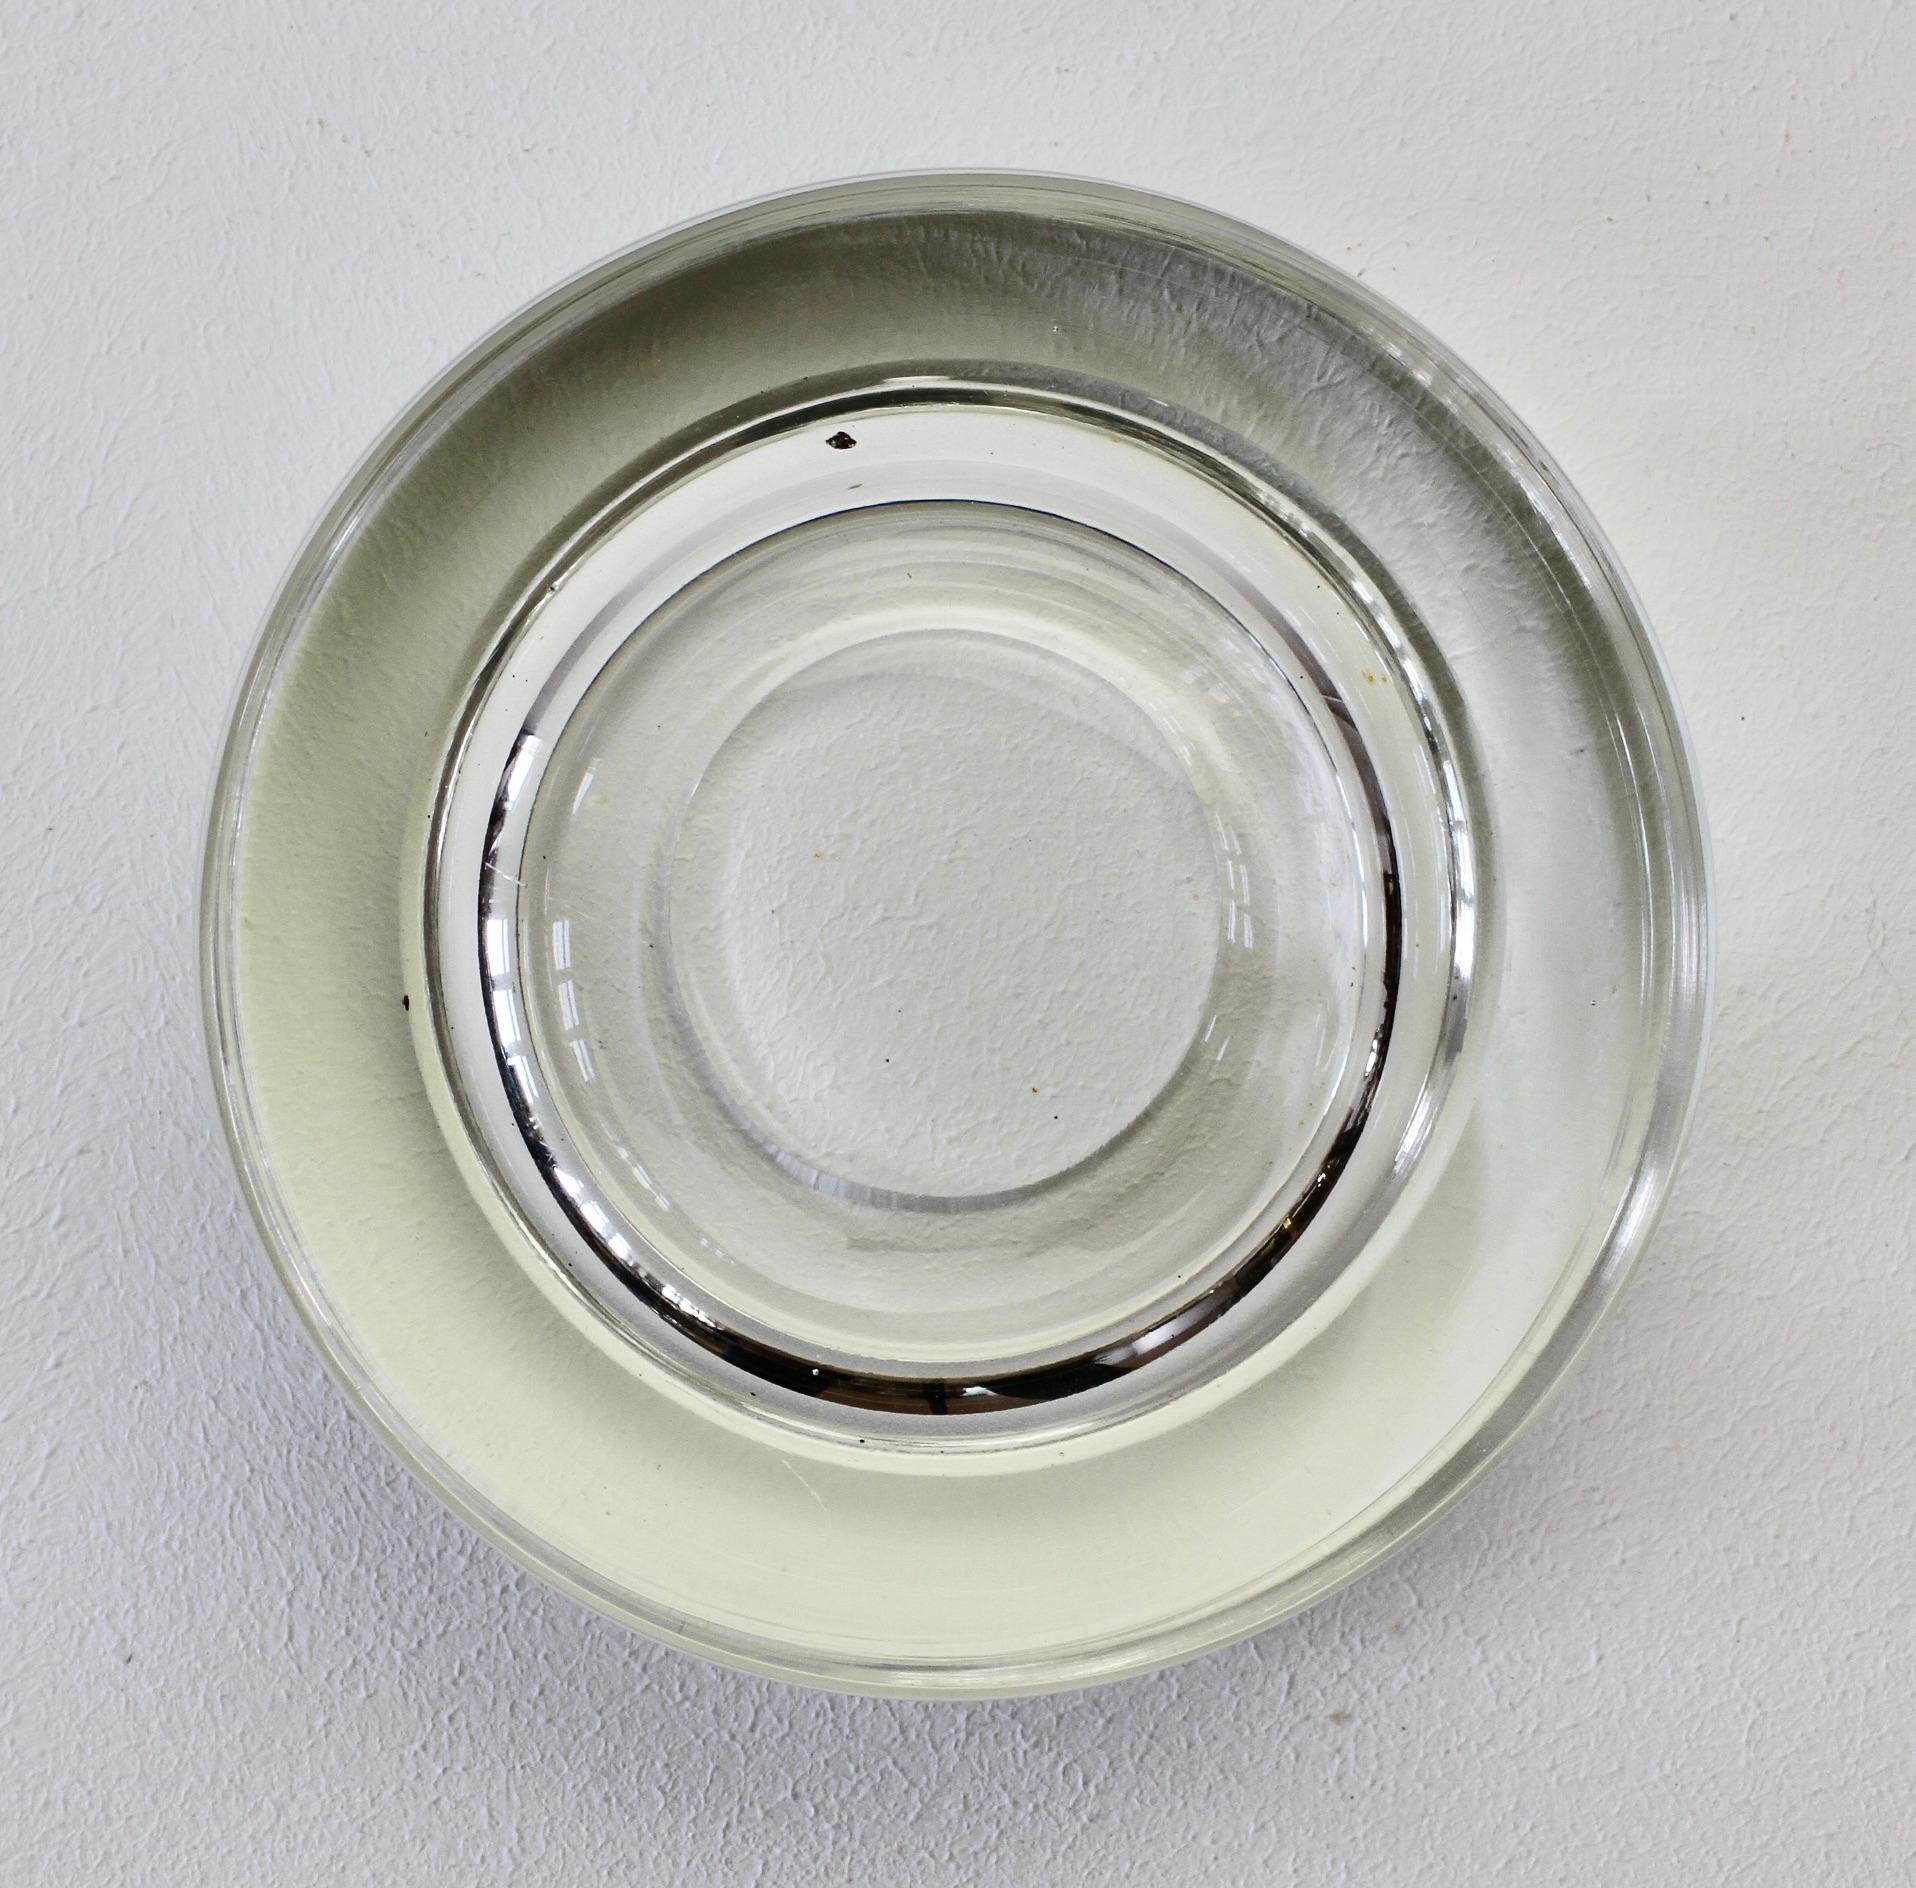 Antonio Da Ros Vintage Italian Murano Clear Sommerso Glass Bowl, Dish or Ashtray For Sale 4